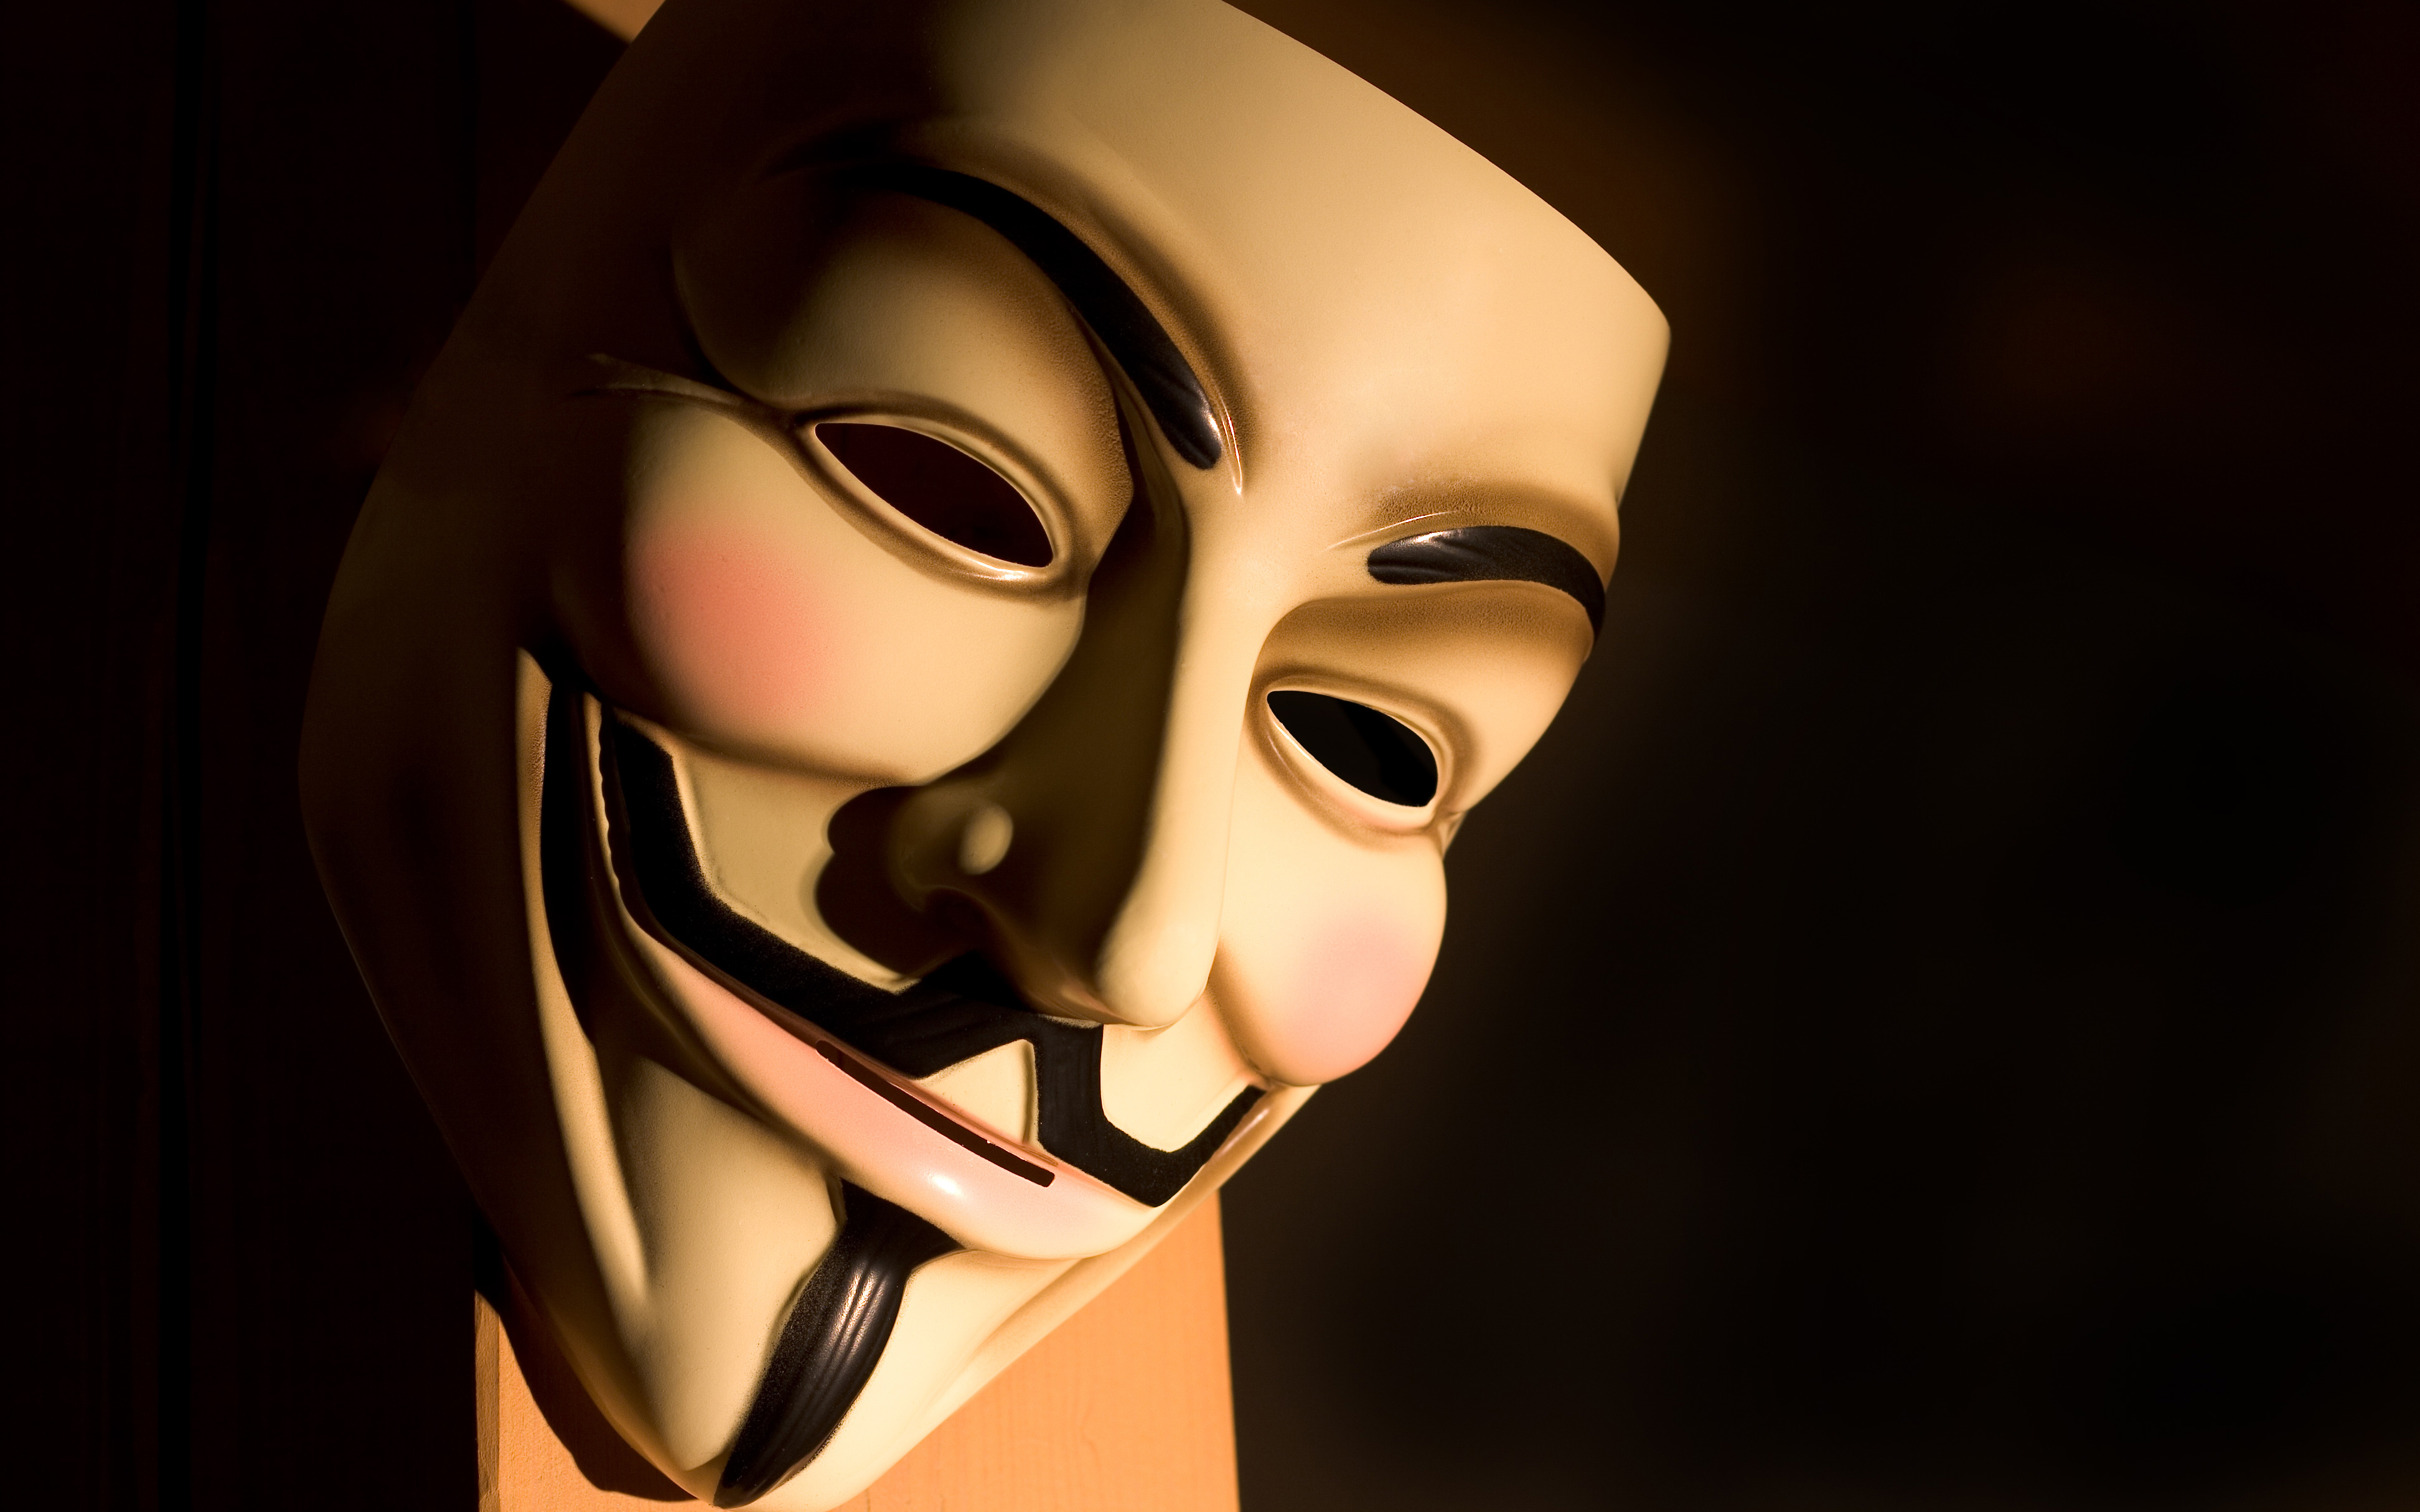 anonymous mask wallpaper 1920x1080